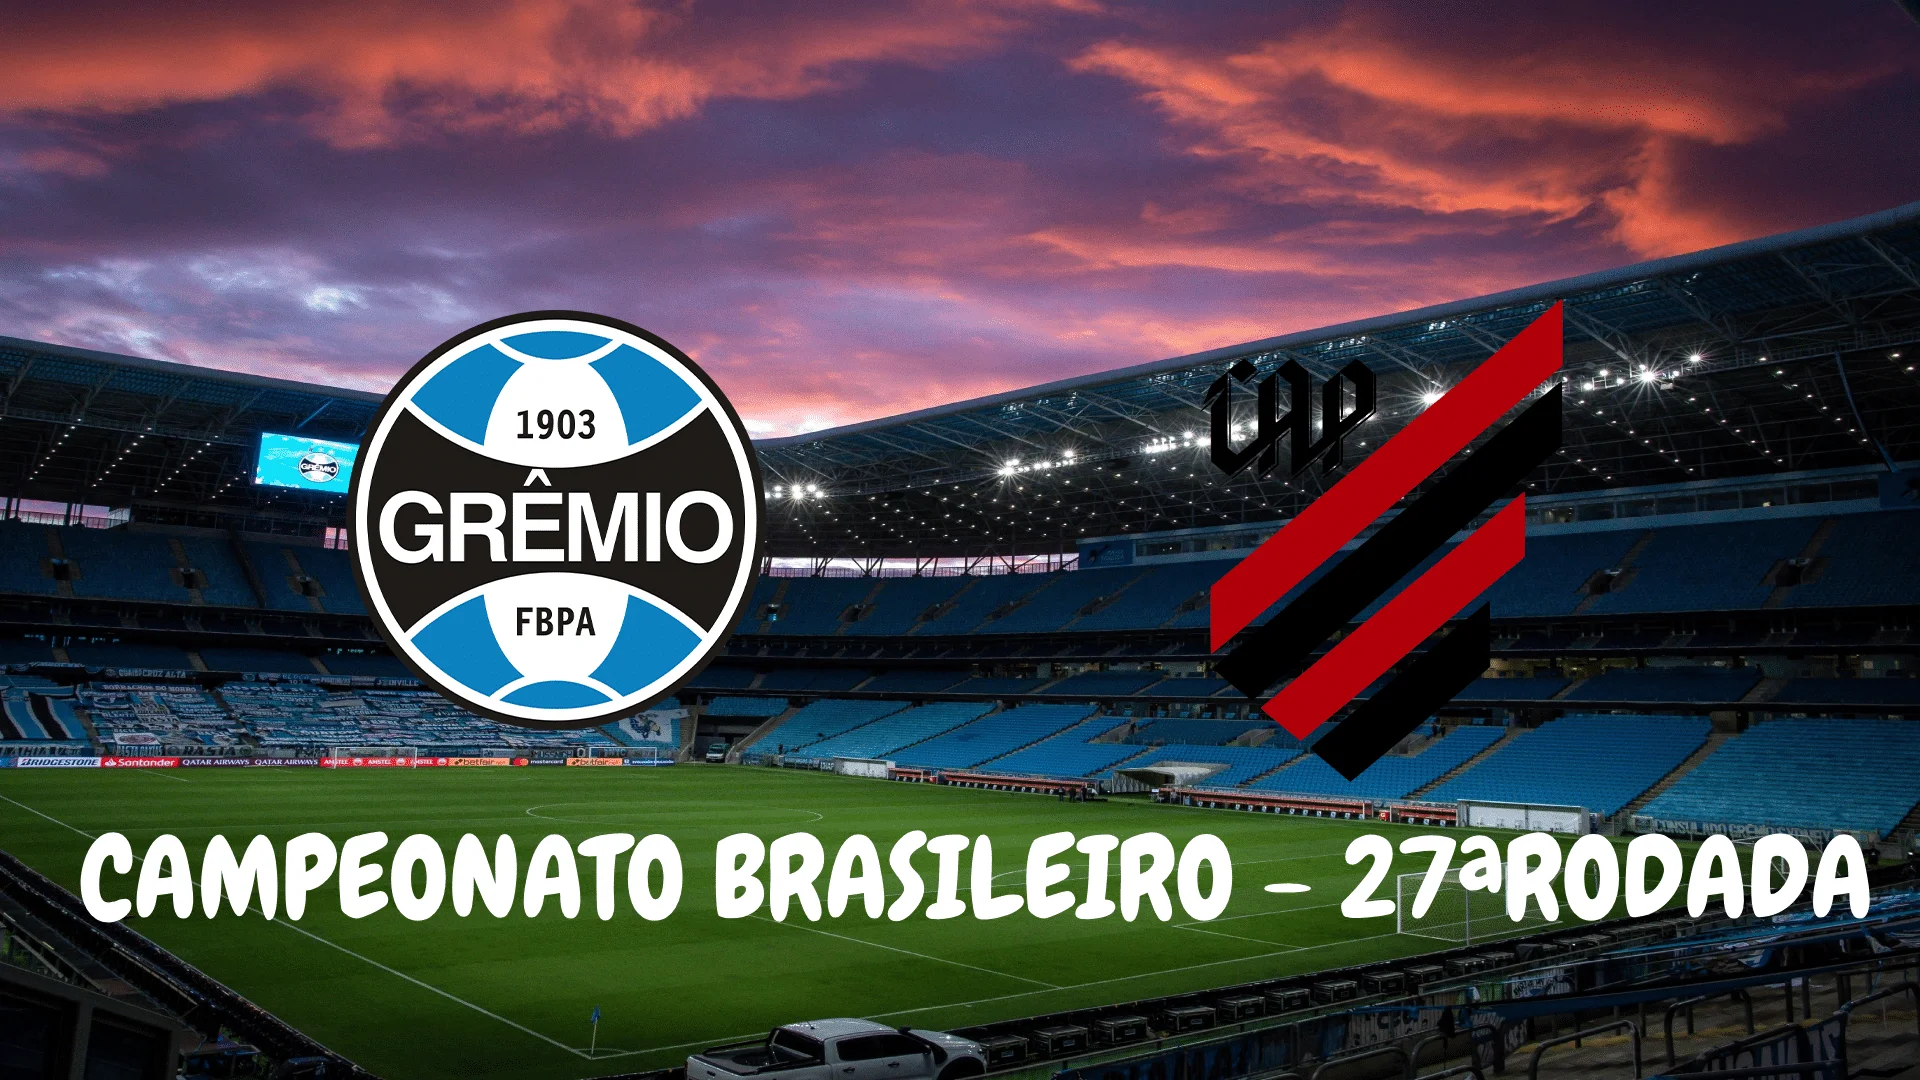 Grêmio vs Caxias: A Clash of Football Titans